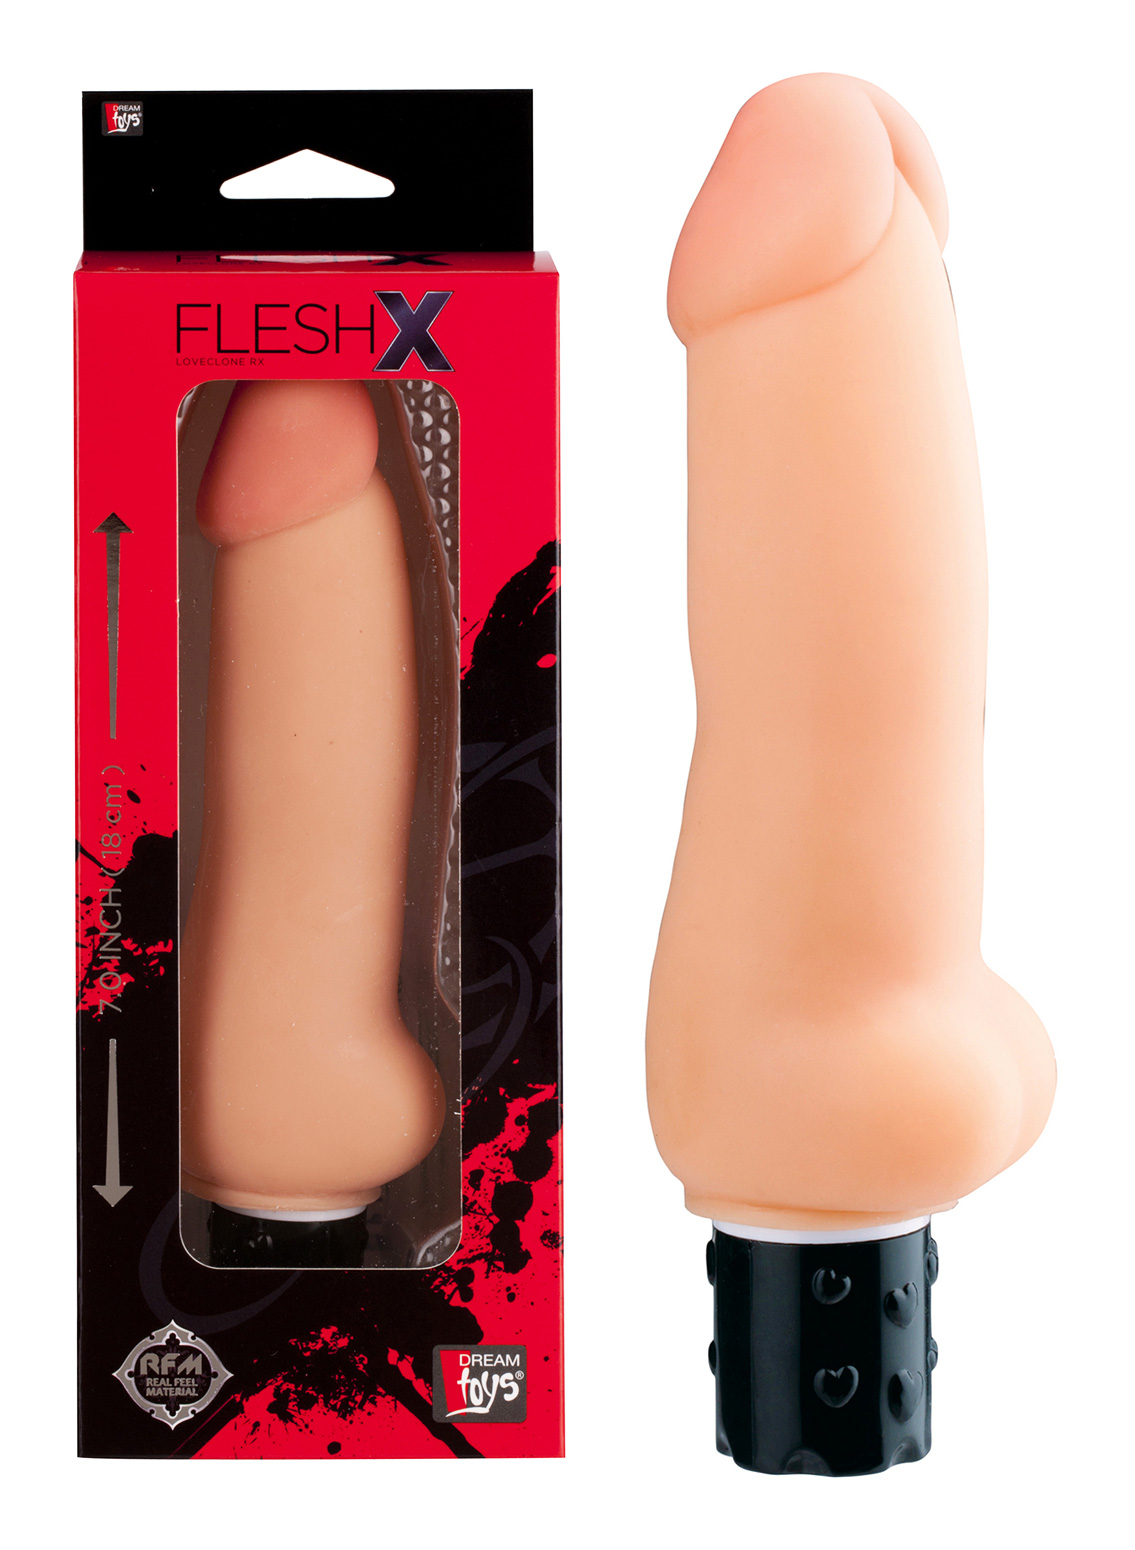 Dream Toys FleshX 7.0" Vibrator